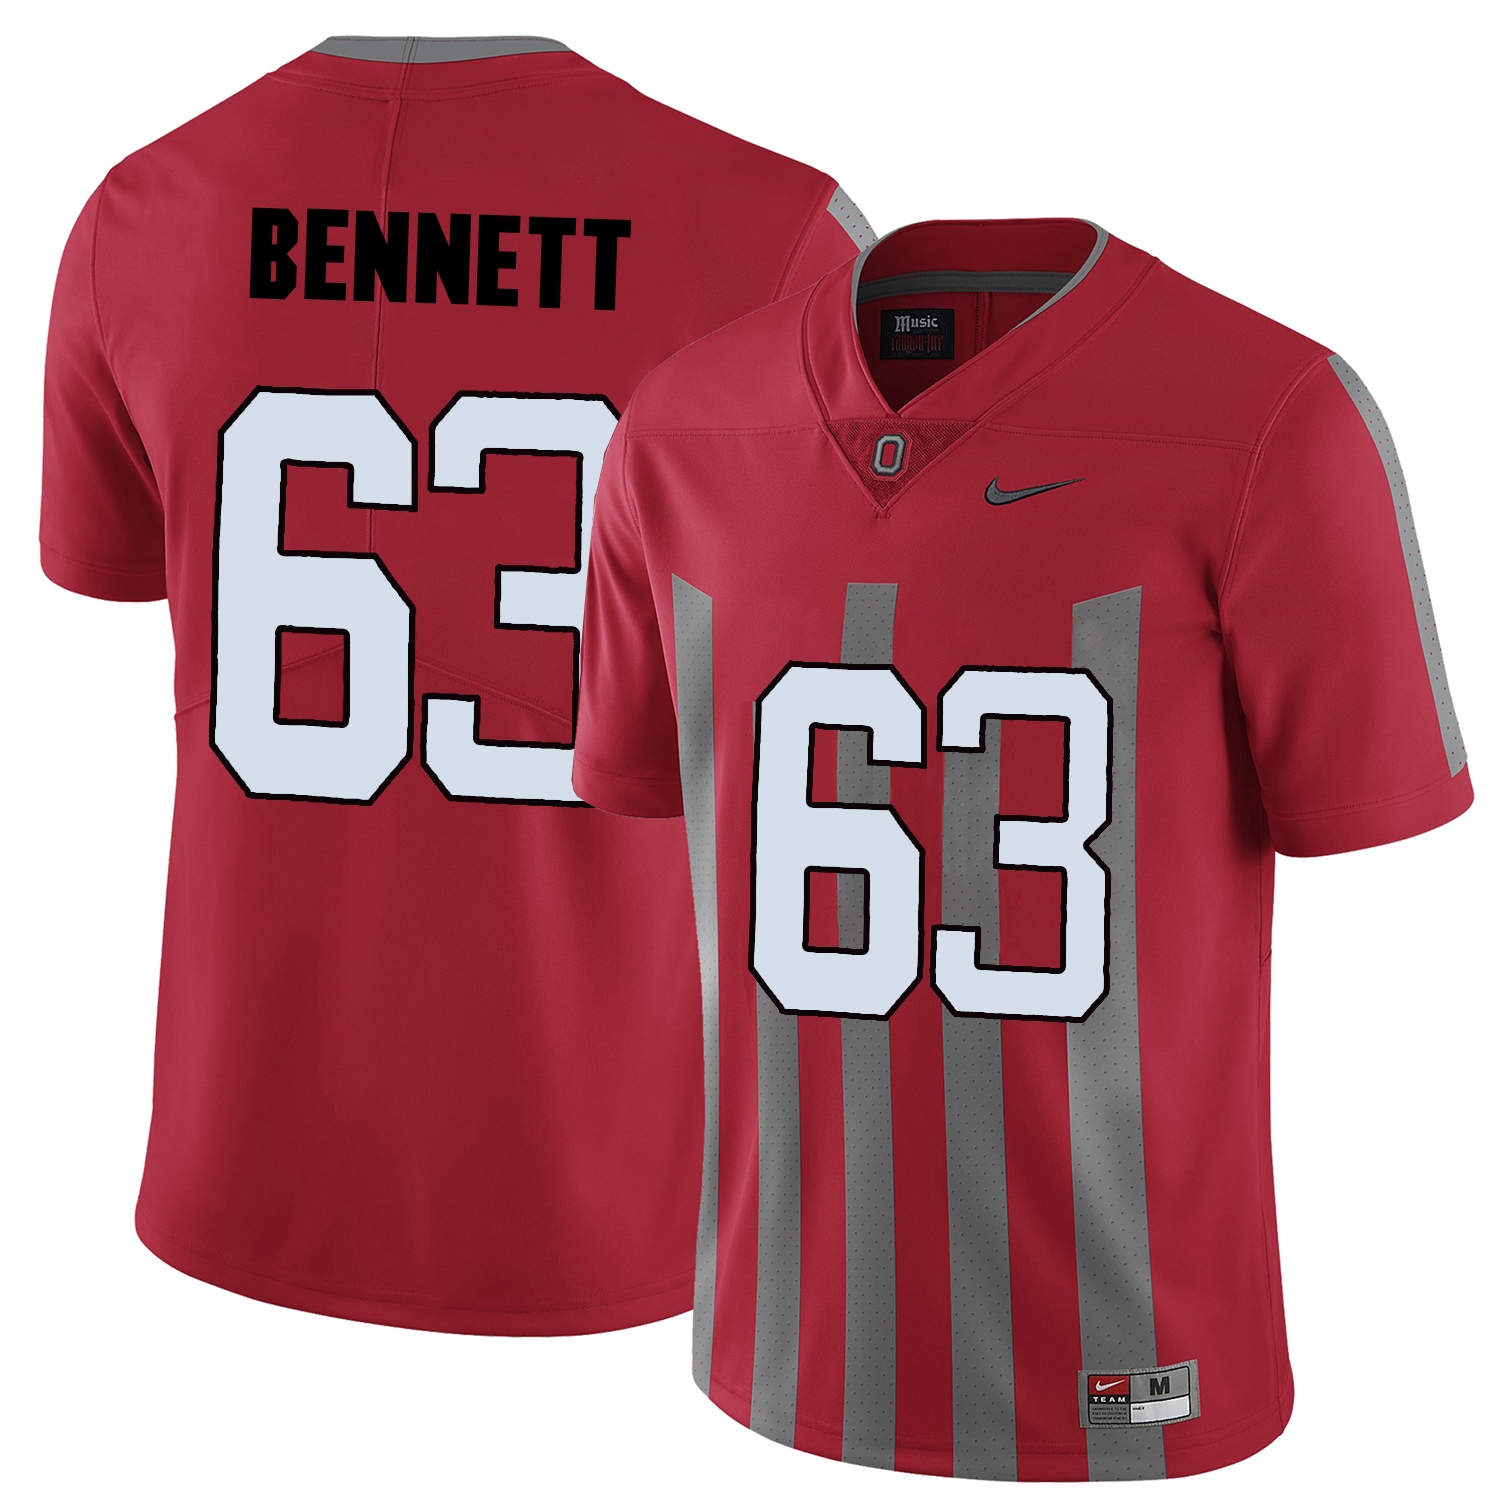 Ohio State Buckeyes Men's NCAA Michael Bennett #63 Red Elite College Football Jersey SJD7049YR